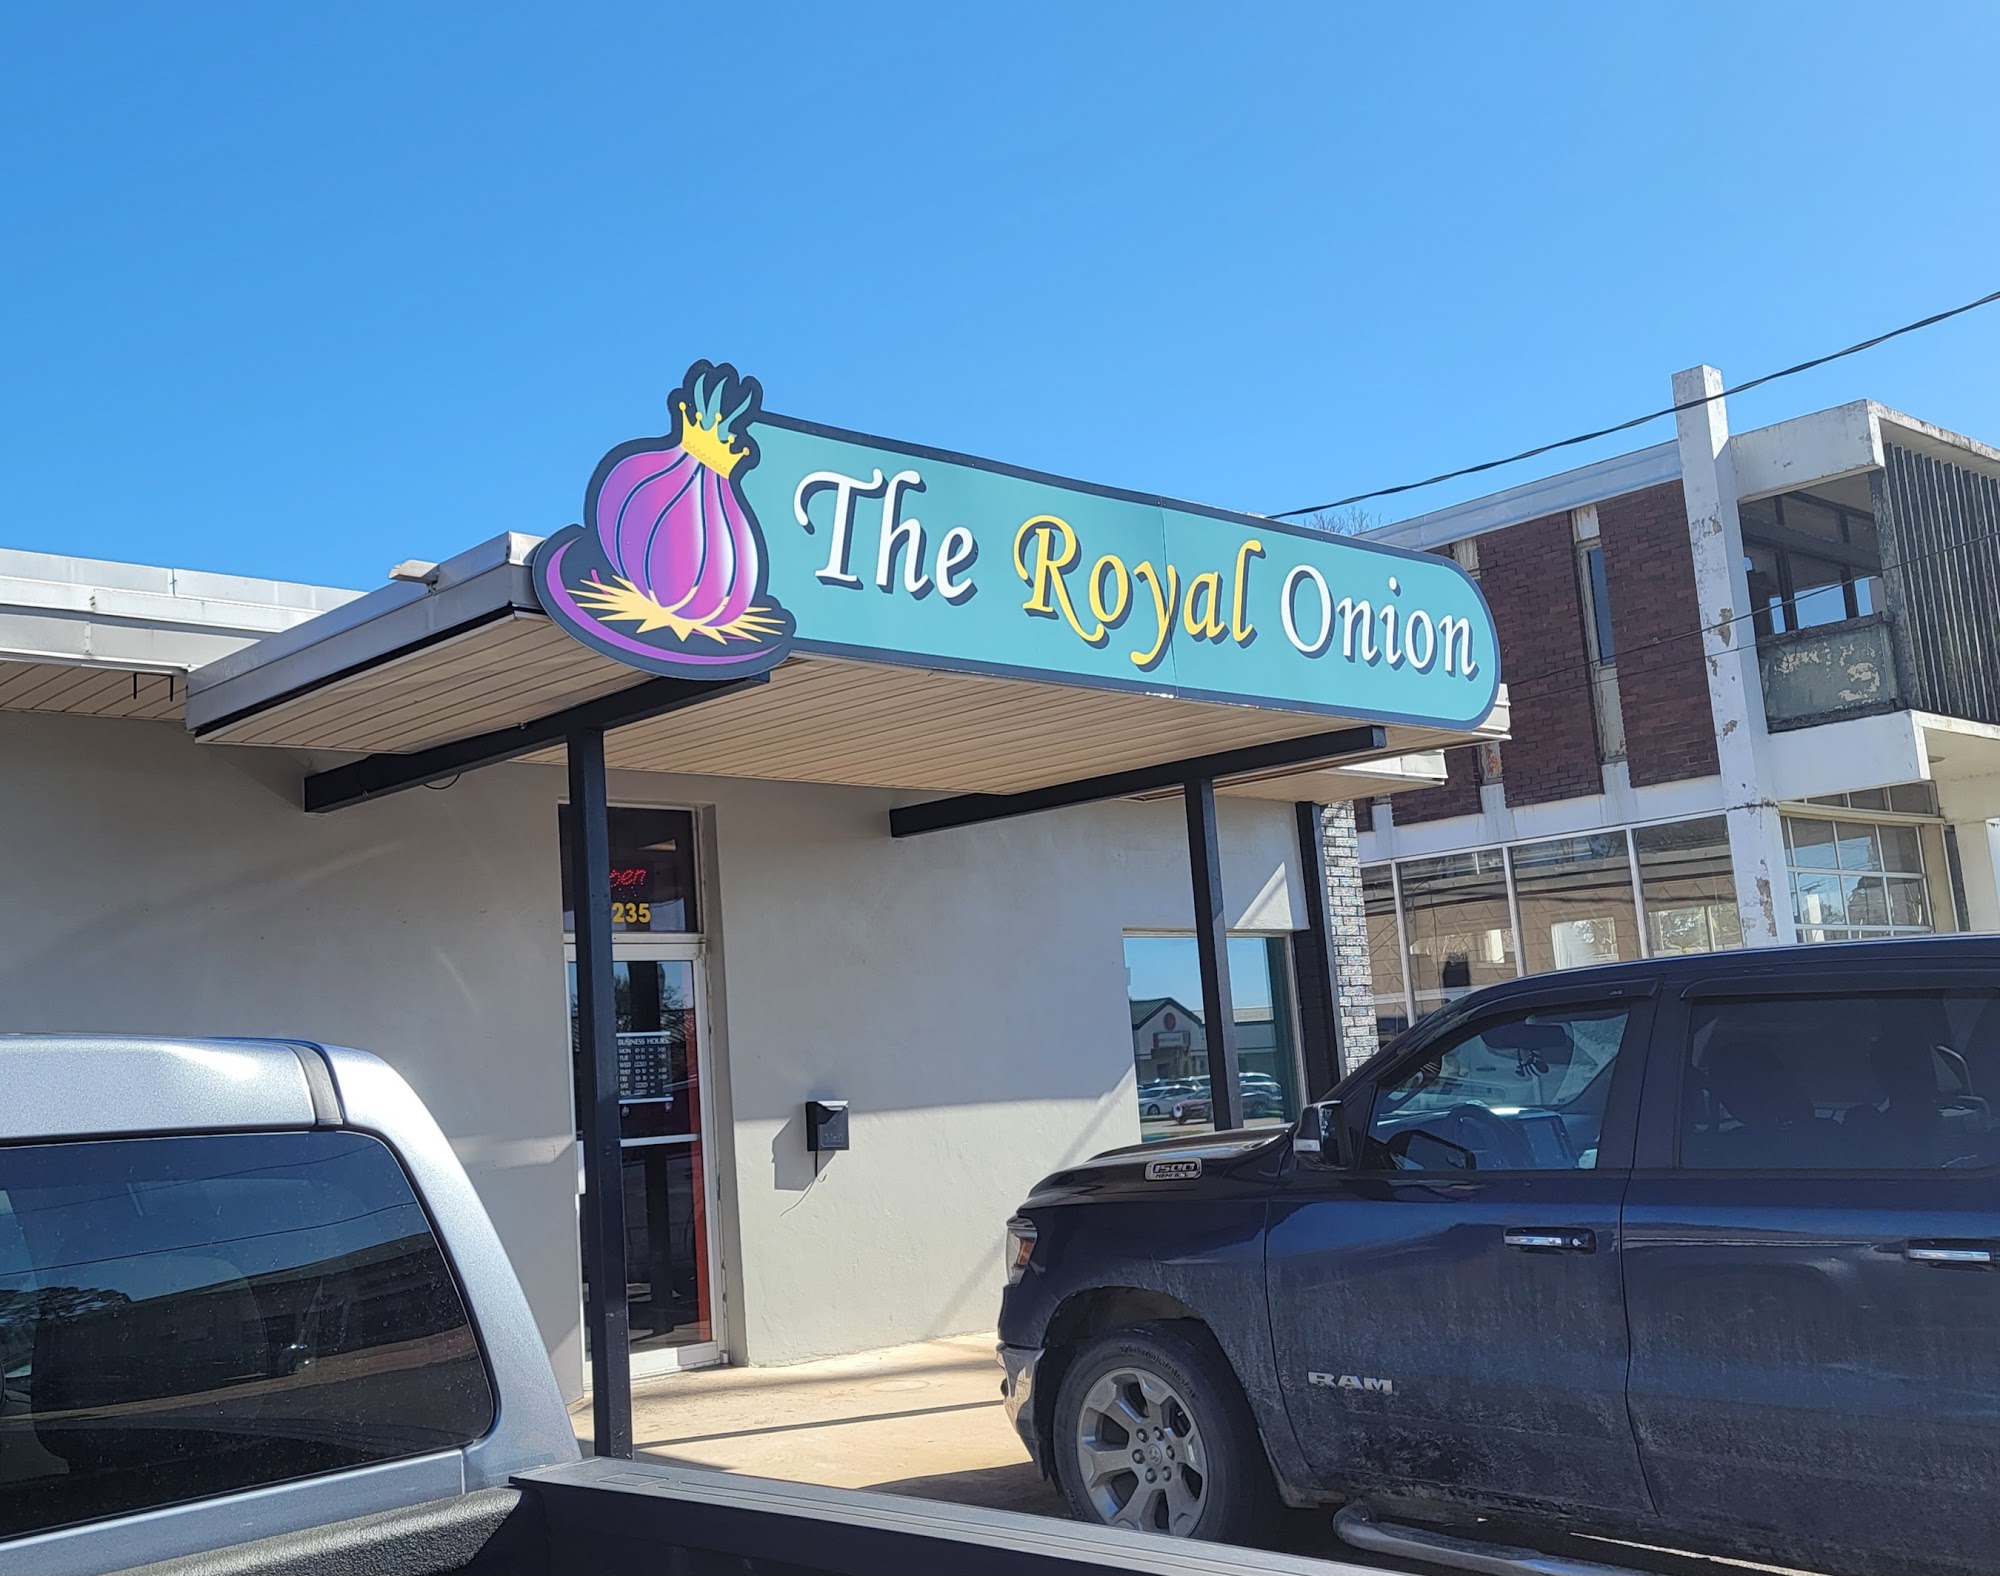 The Royal Onion